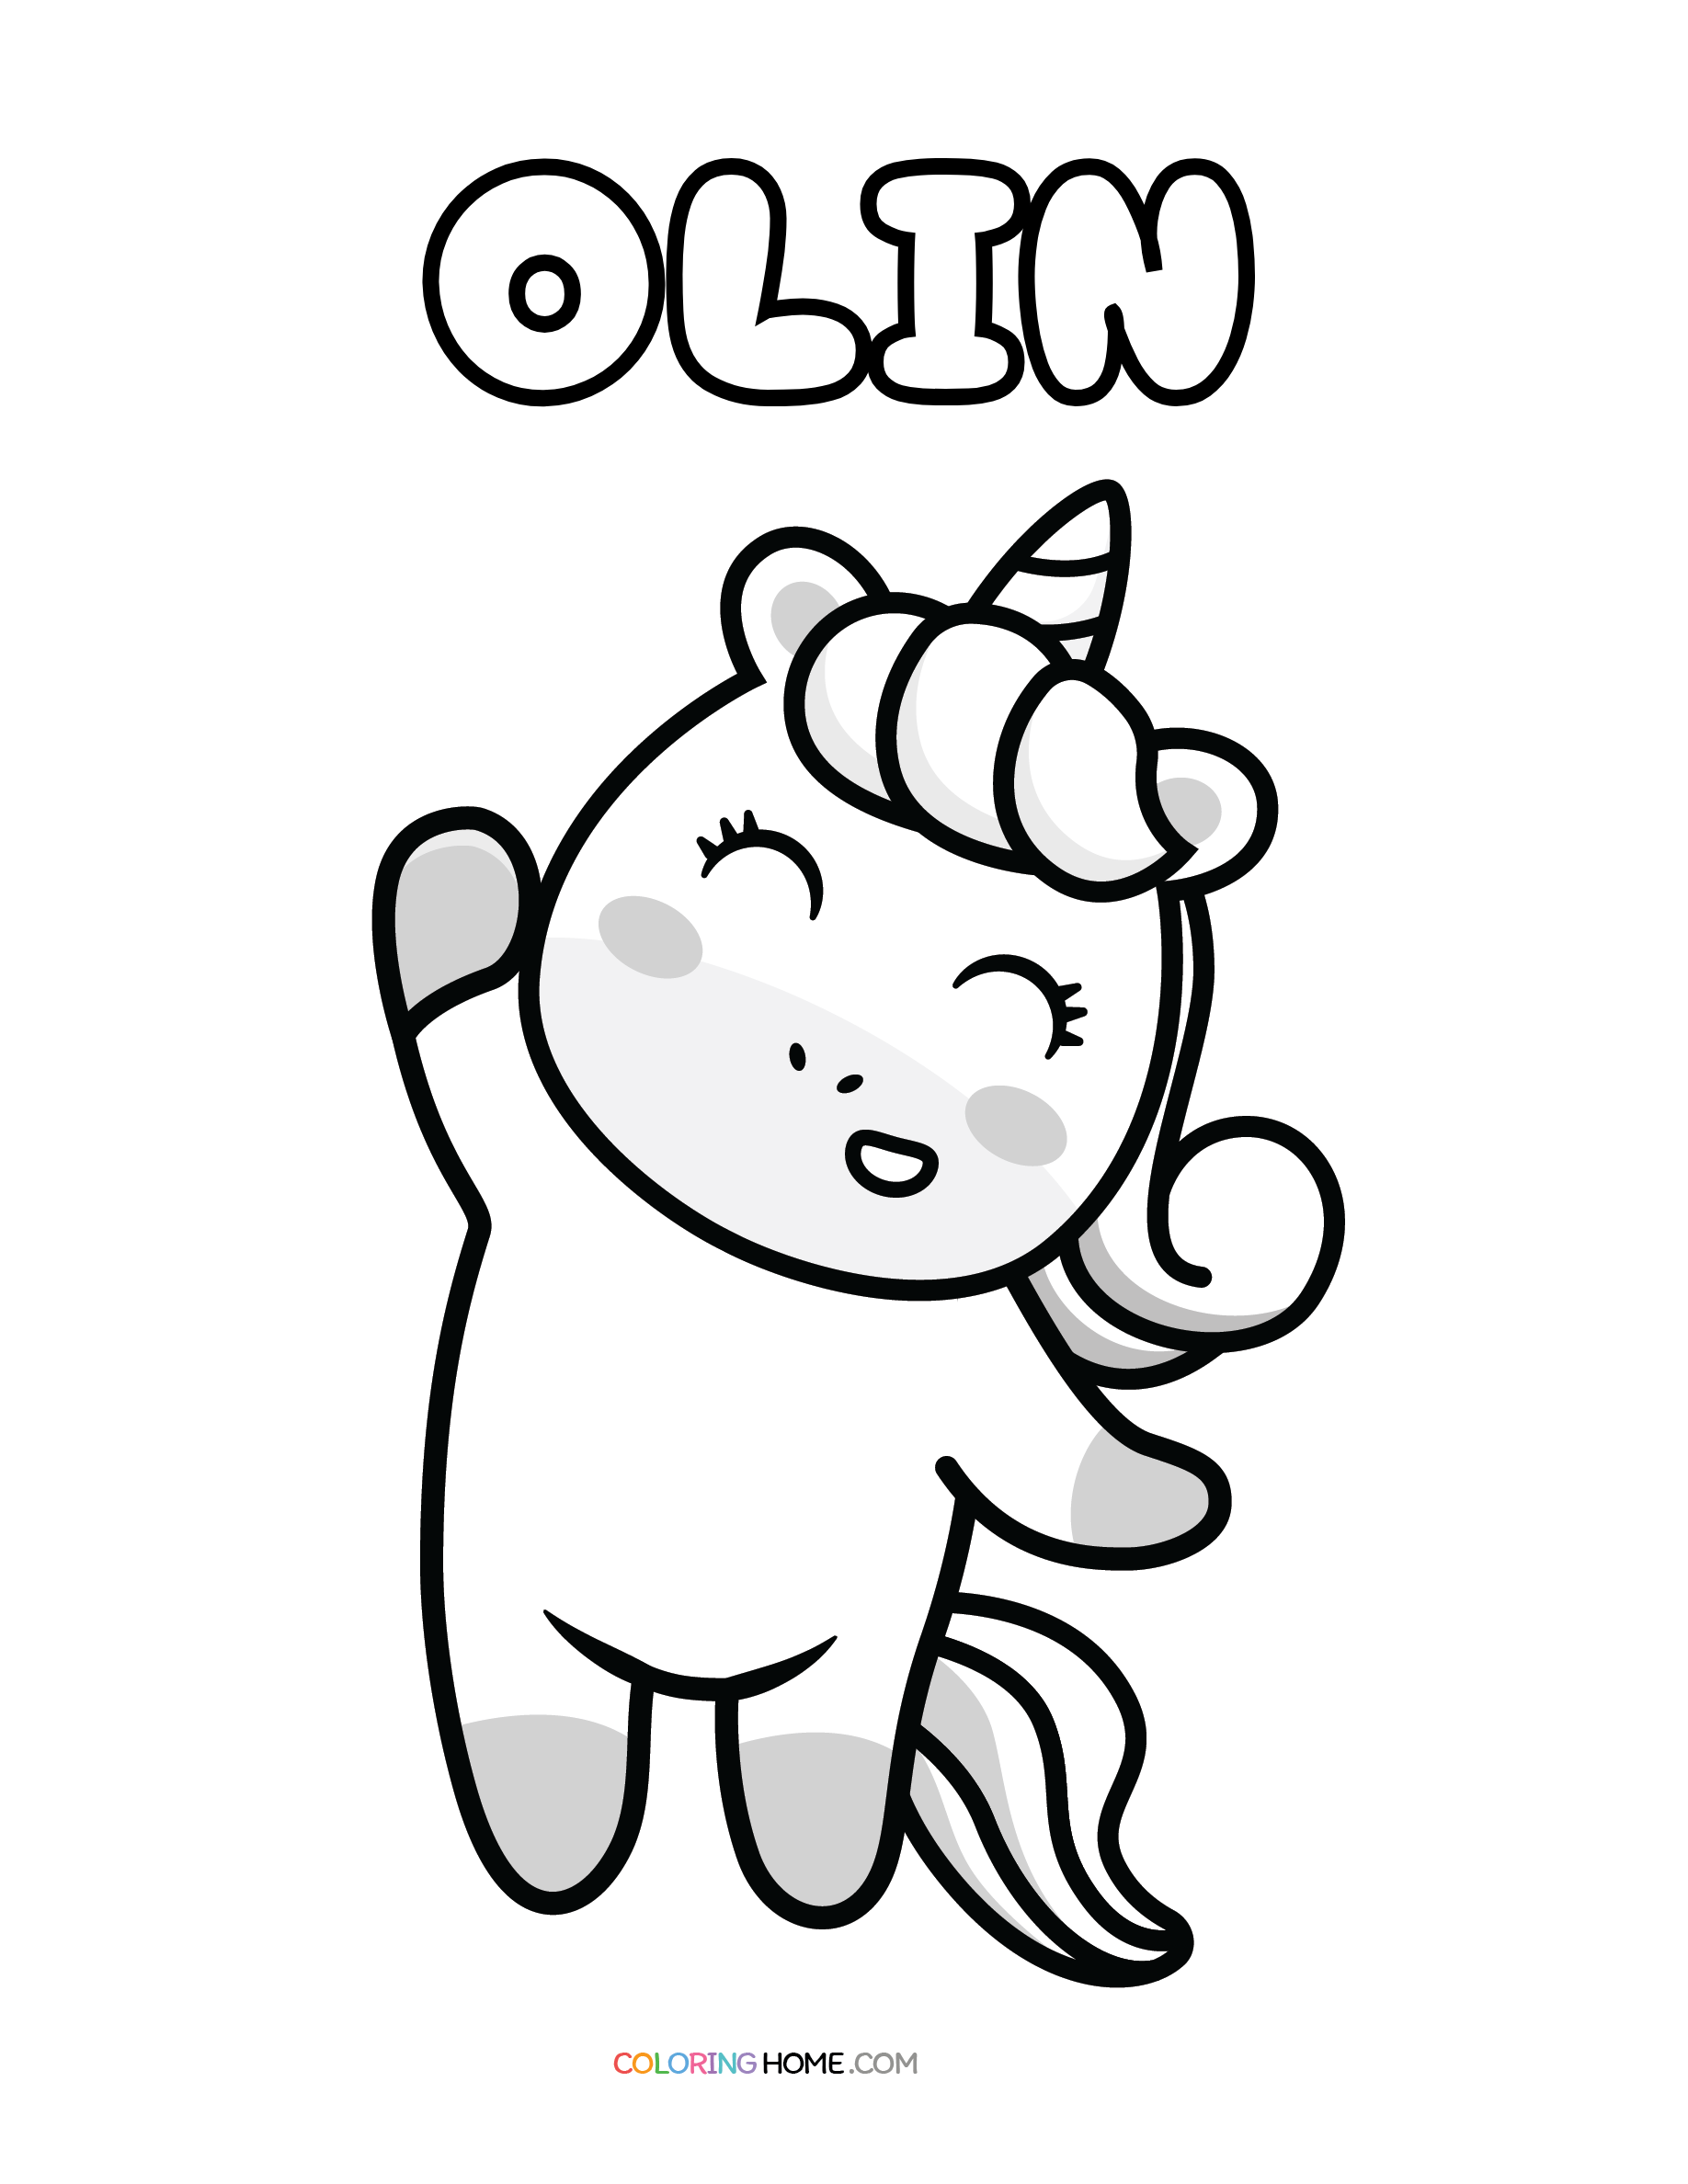 Olin unicorn coloring page